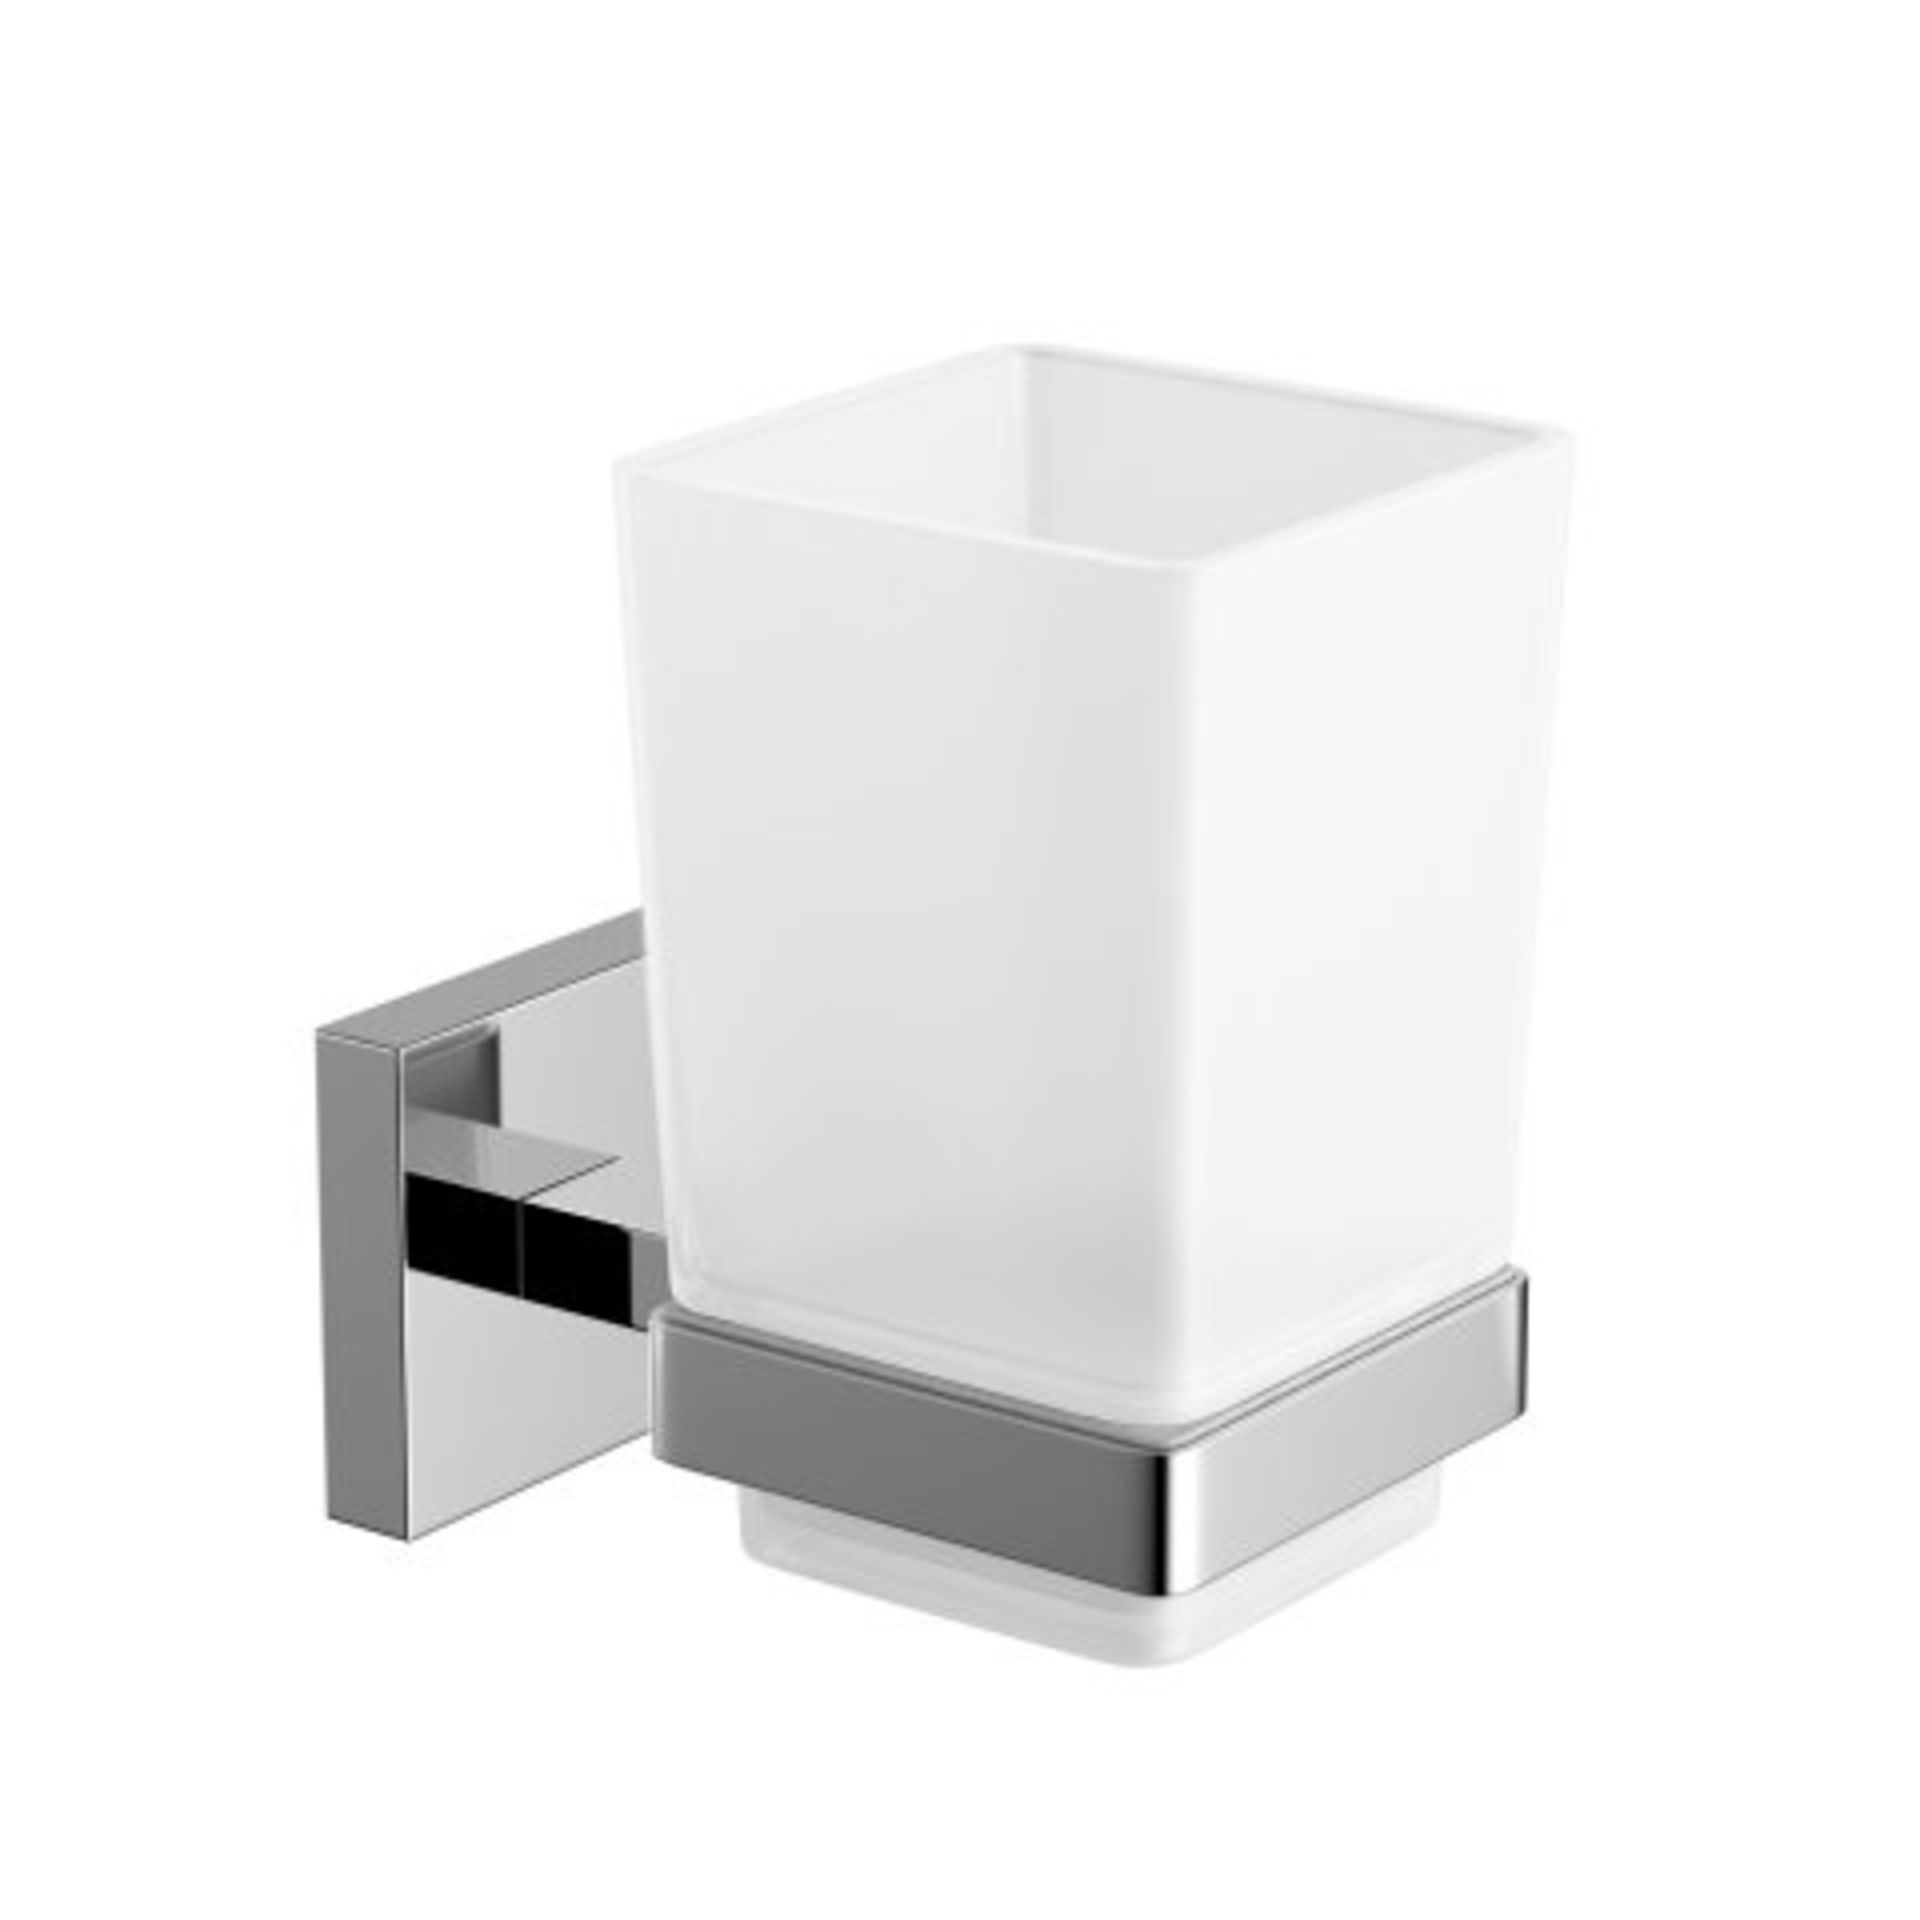 (I130) Jesmond Tumbler Holder Tumbler and holder designed for a modern bathroom. The square design - Image 2 of 3